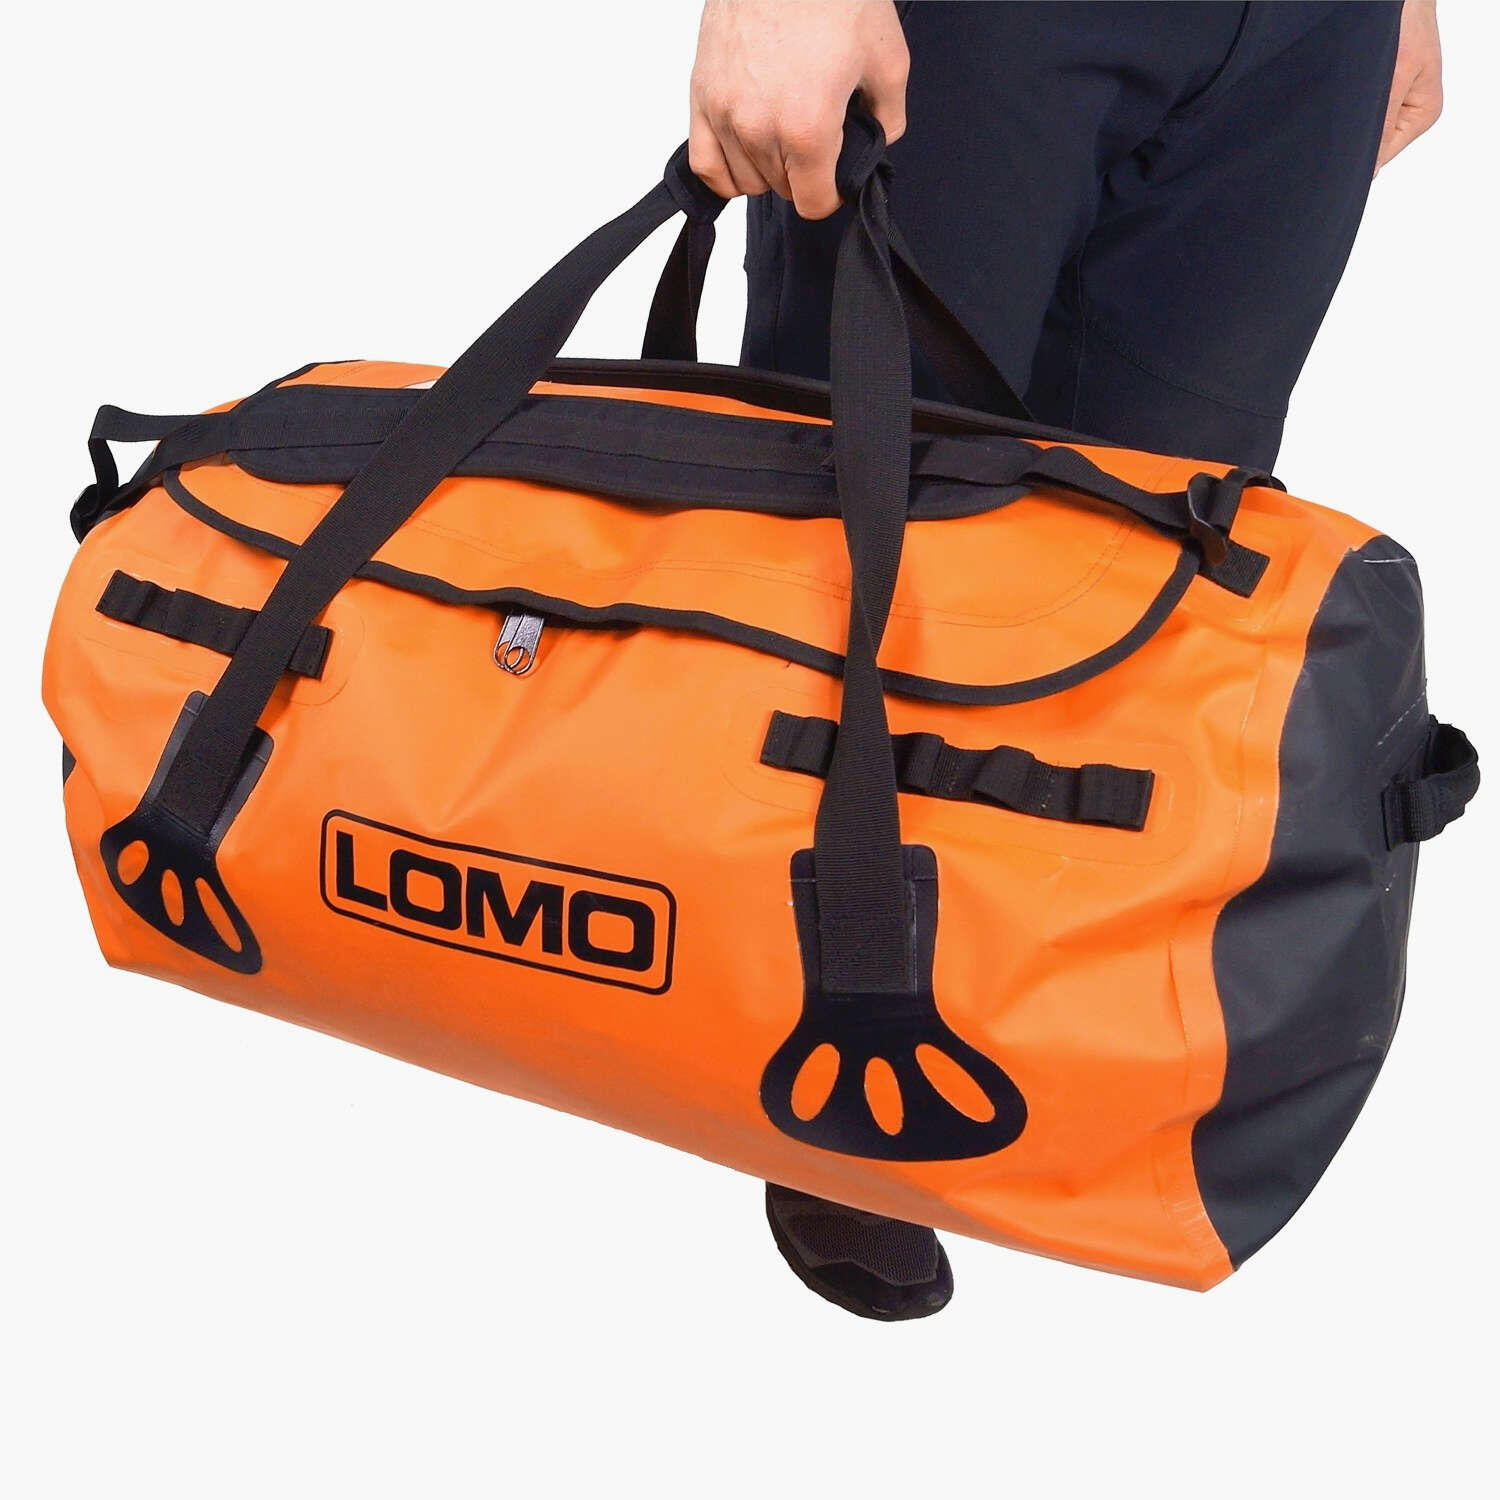 Lomo Blaze Expedition Holdall - Orange 60L 2/7